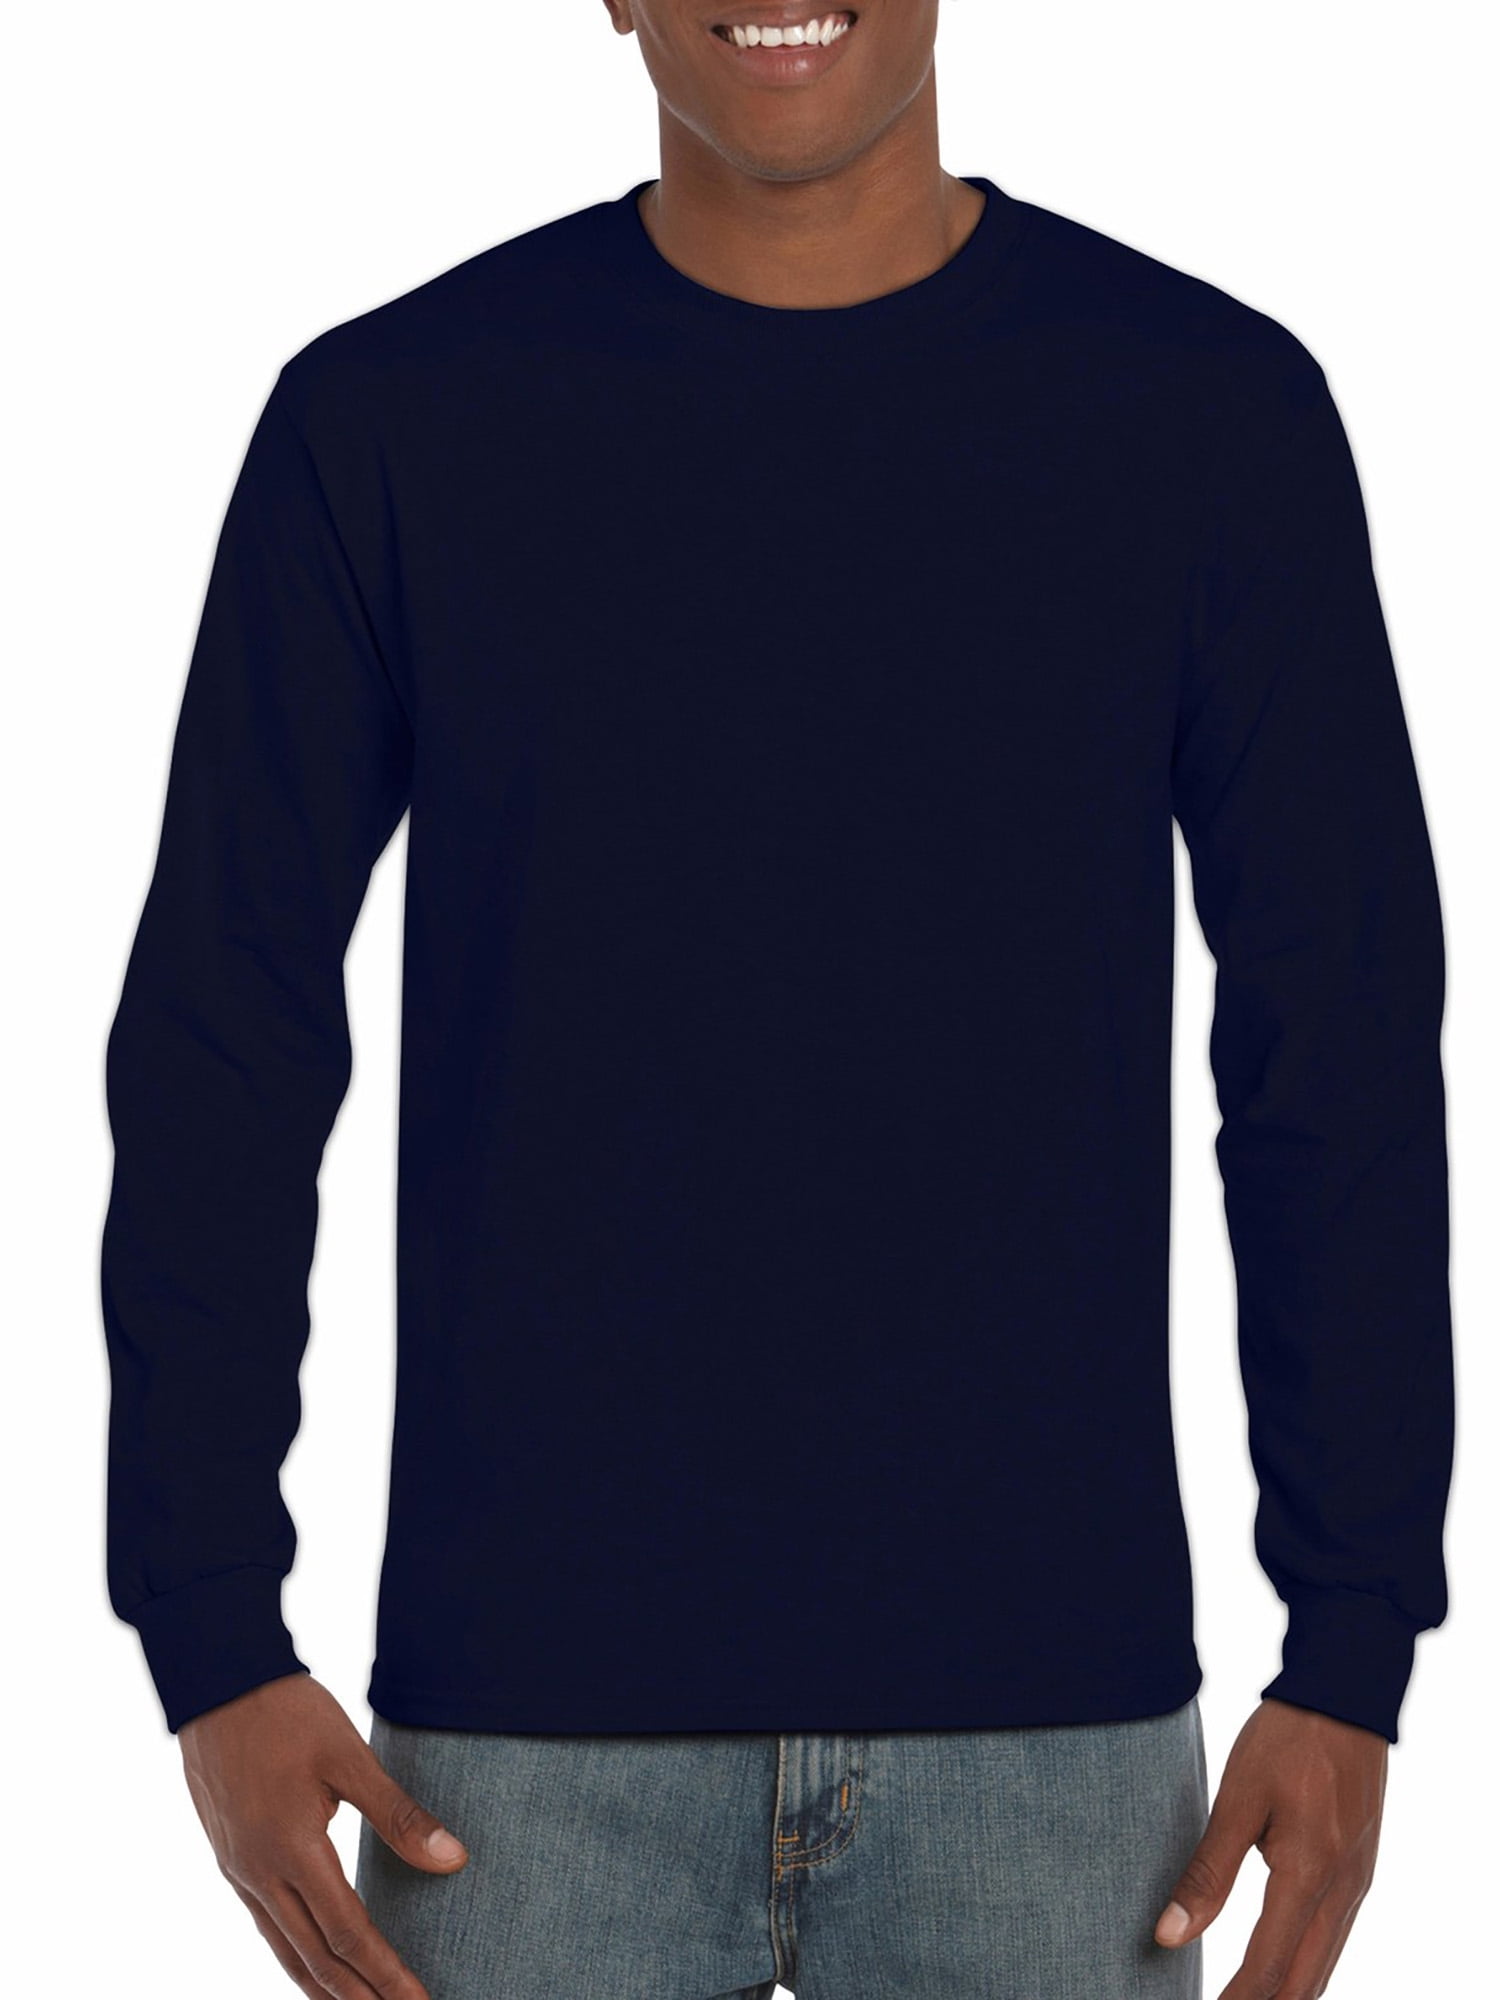 Ameristar Casino Long Sleeve XL T-Shirt 